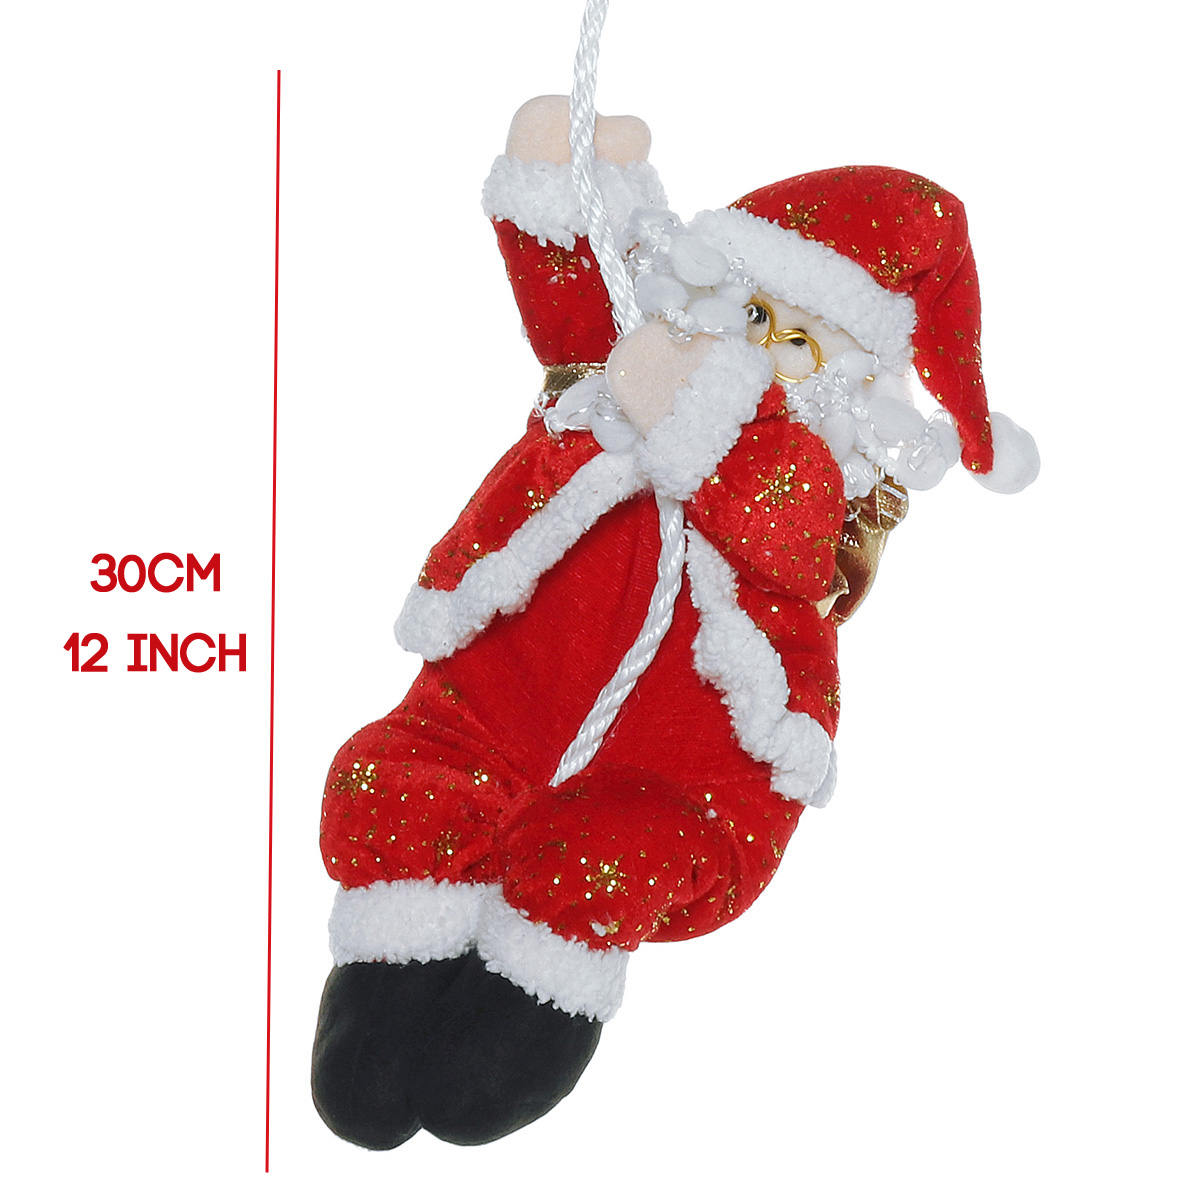 Santa-Climbing-On-Rope-Indoor-Outdoor-Christmas-Tree-Garden-Decorations-1590884-6